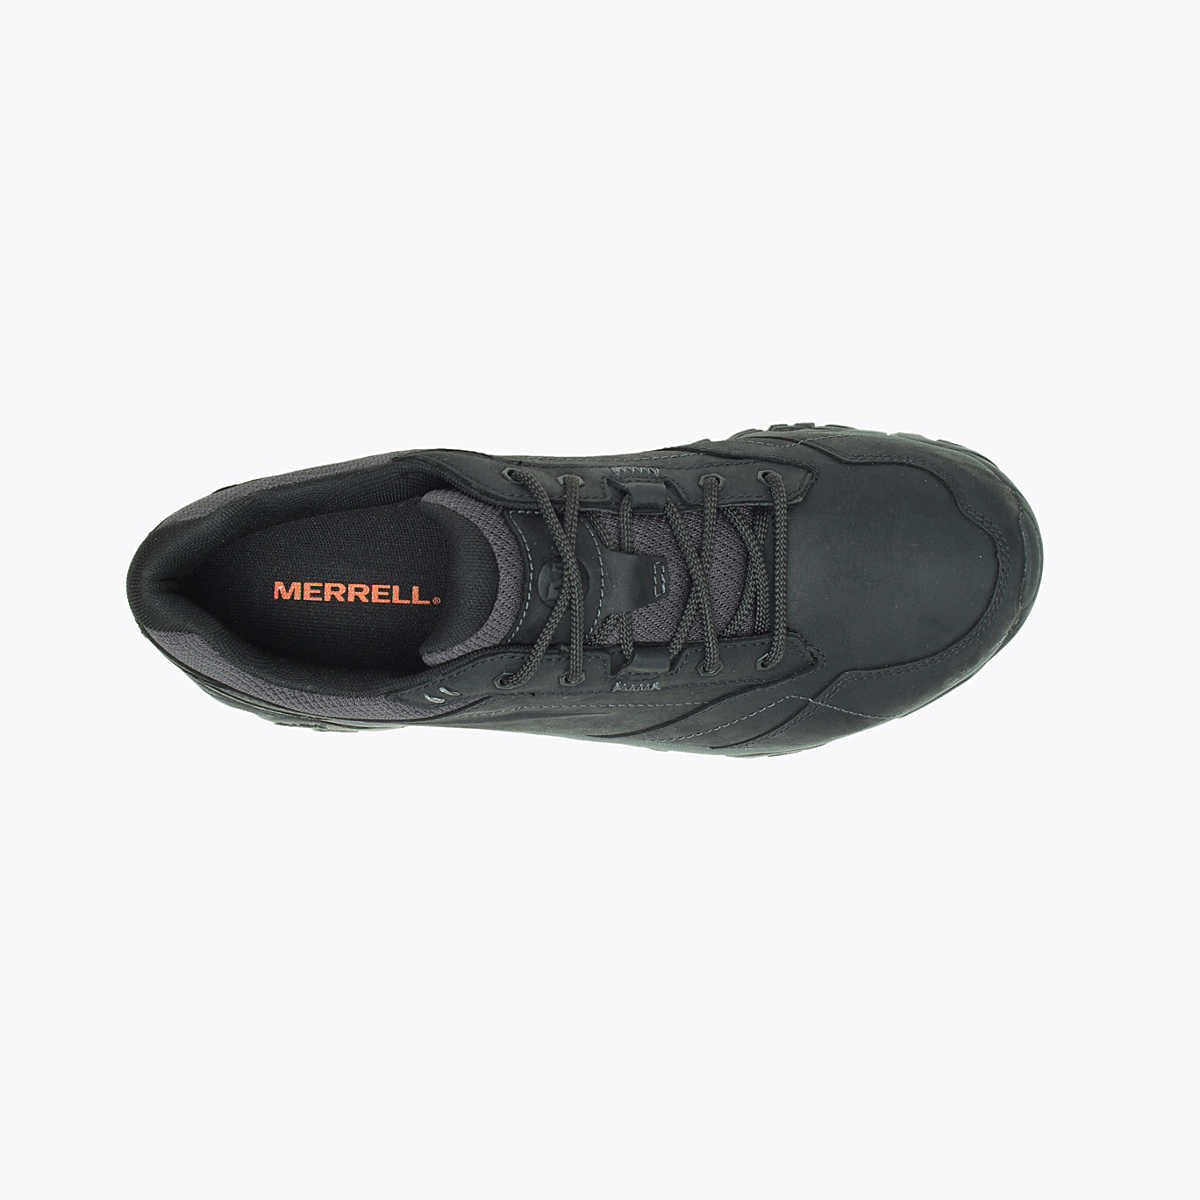 Merrell - Moab Adventure - Black Waterproof Leather